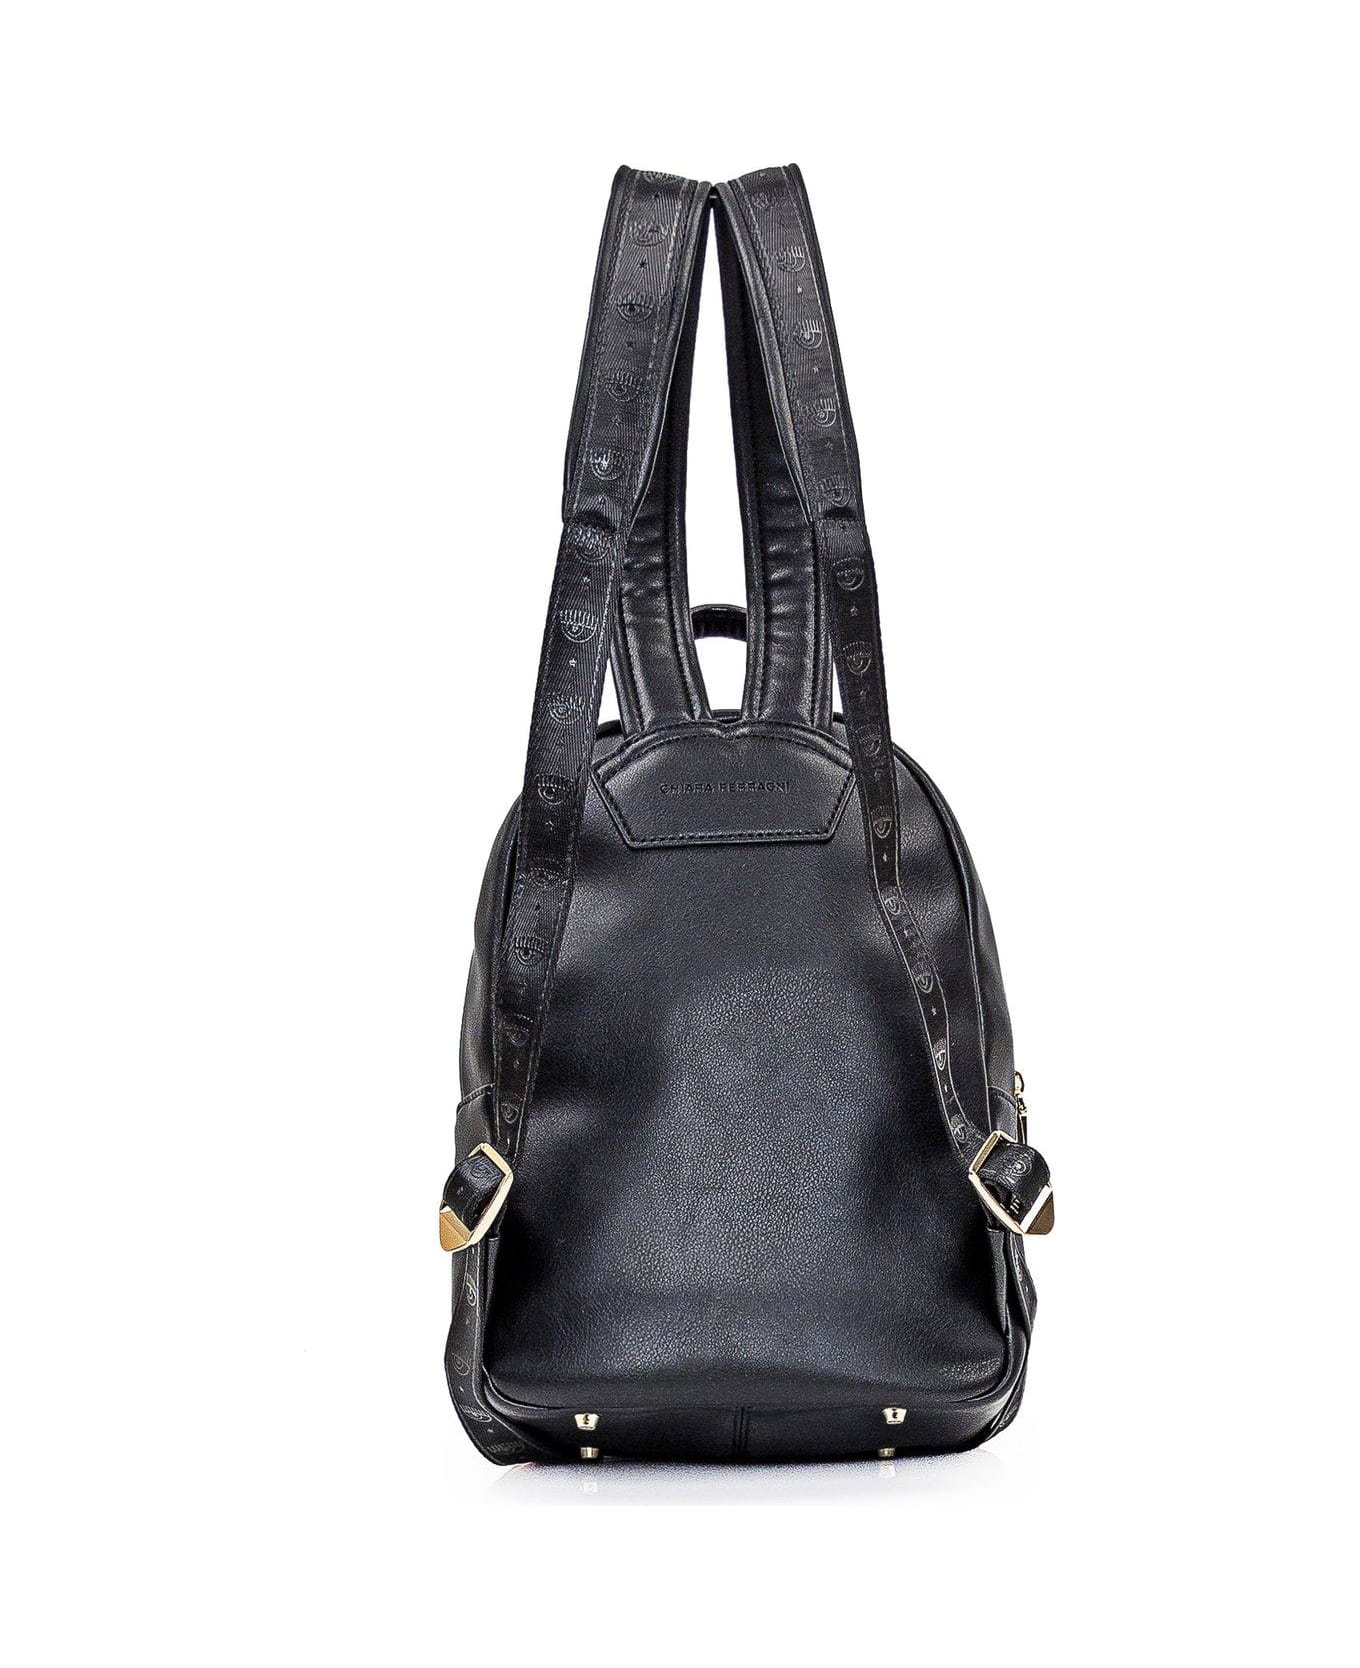 Chiara Ferragni Eyelike Studded Zipped Backpack - Black